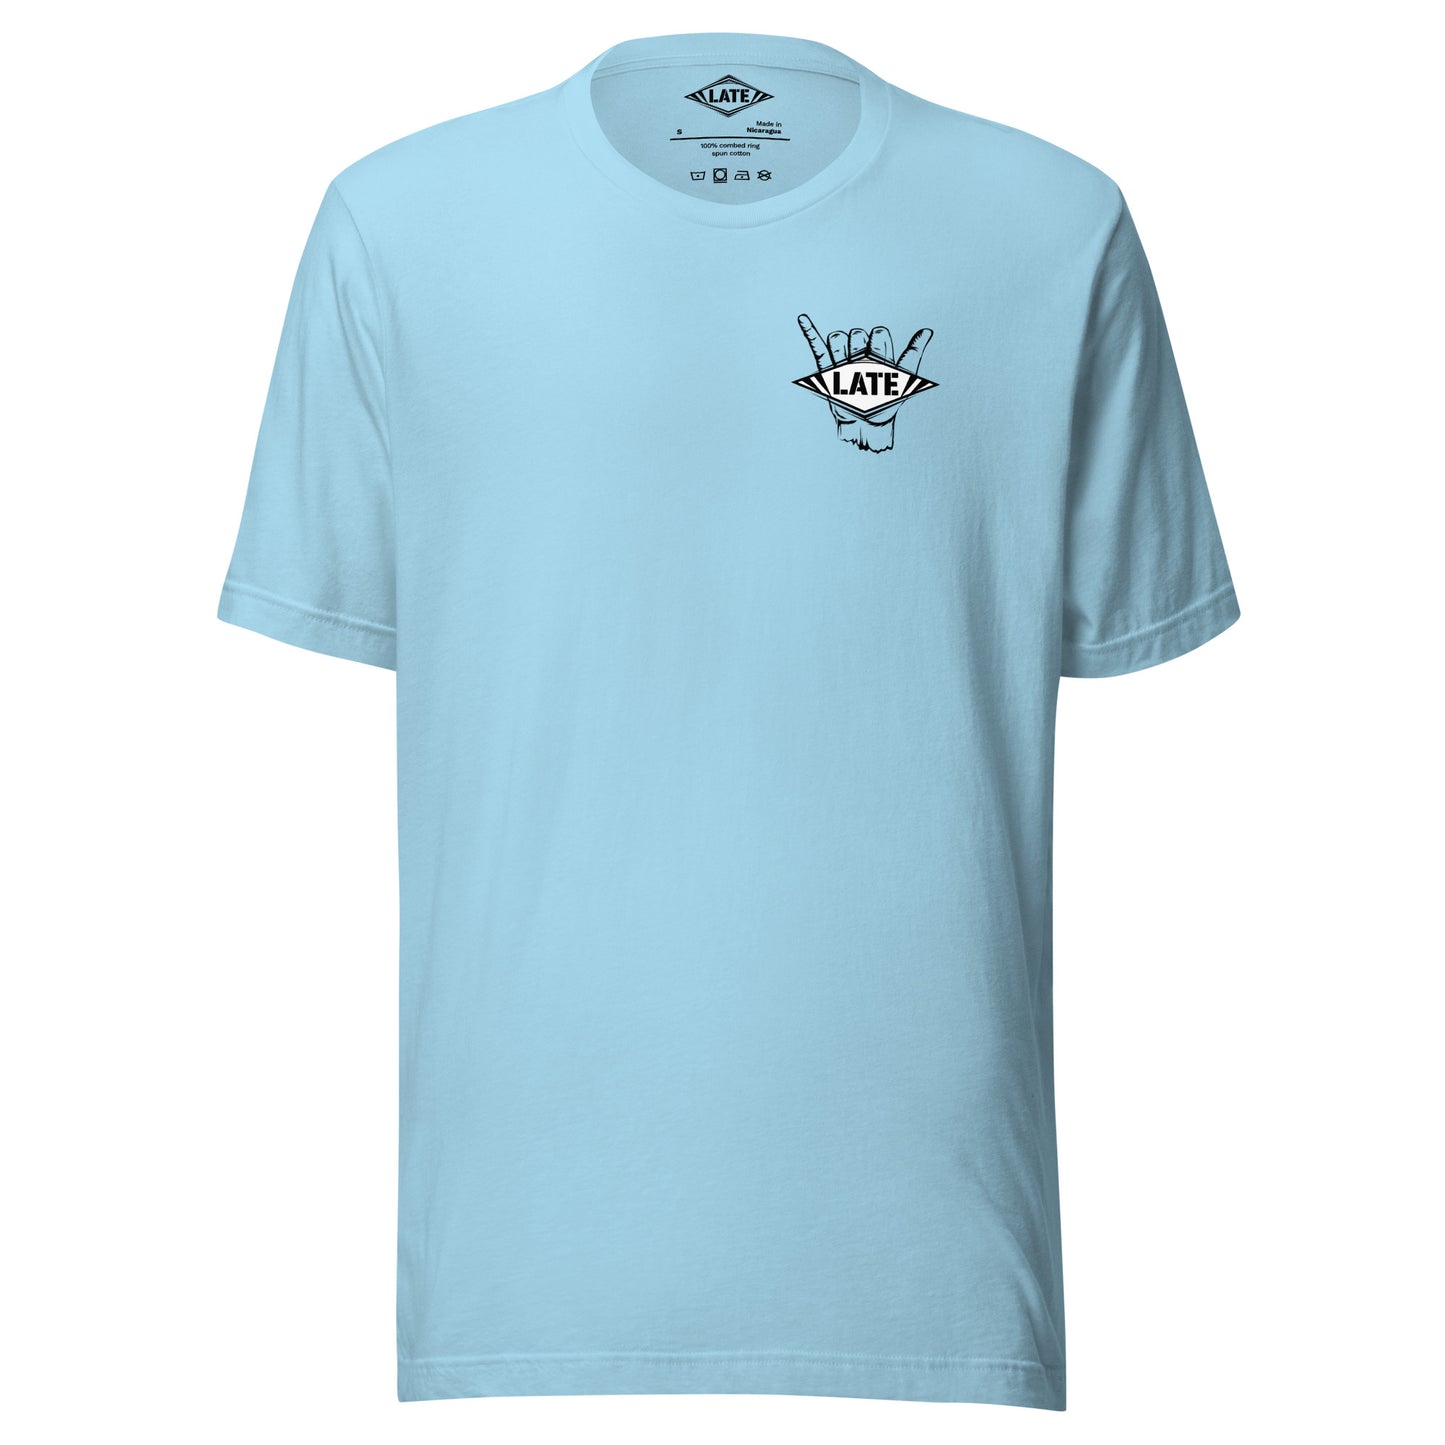 T-Shirt surfing main shaka avec le logo Late face avant t-shirt unisex couleur bleu océan